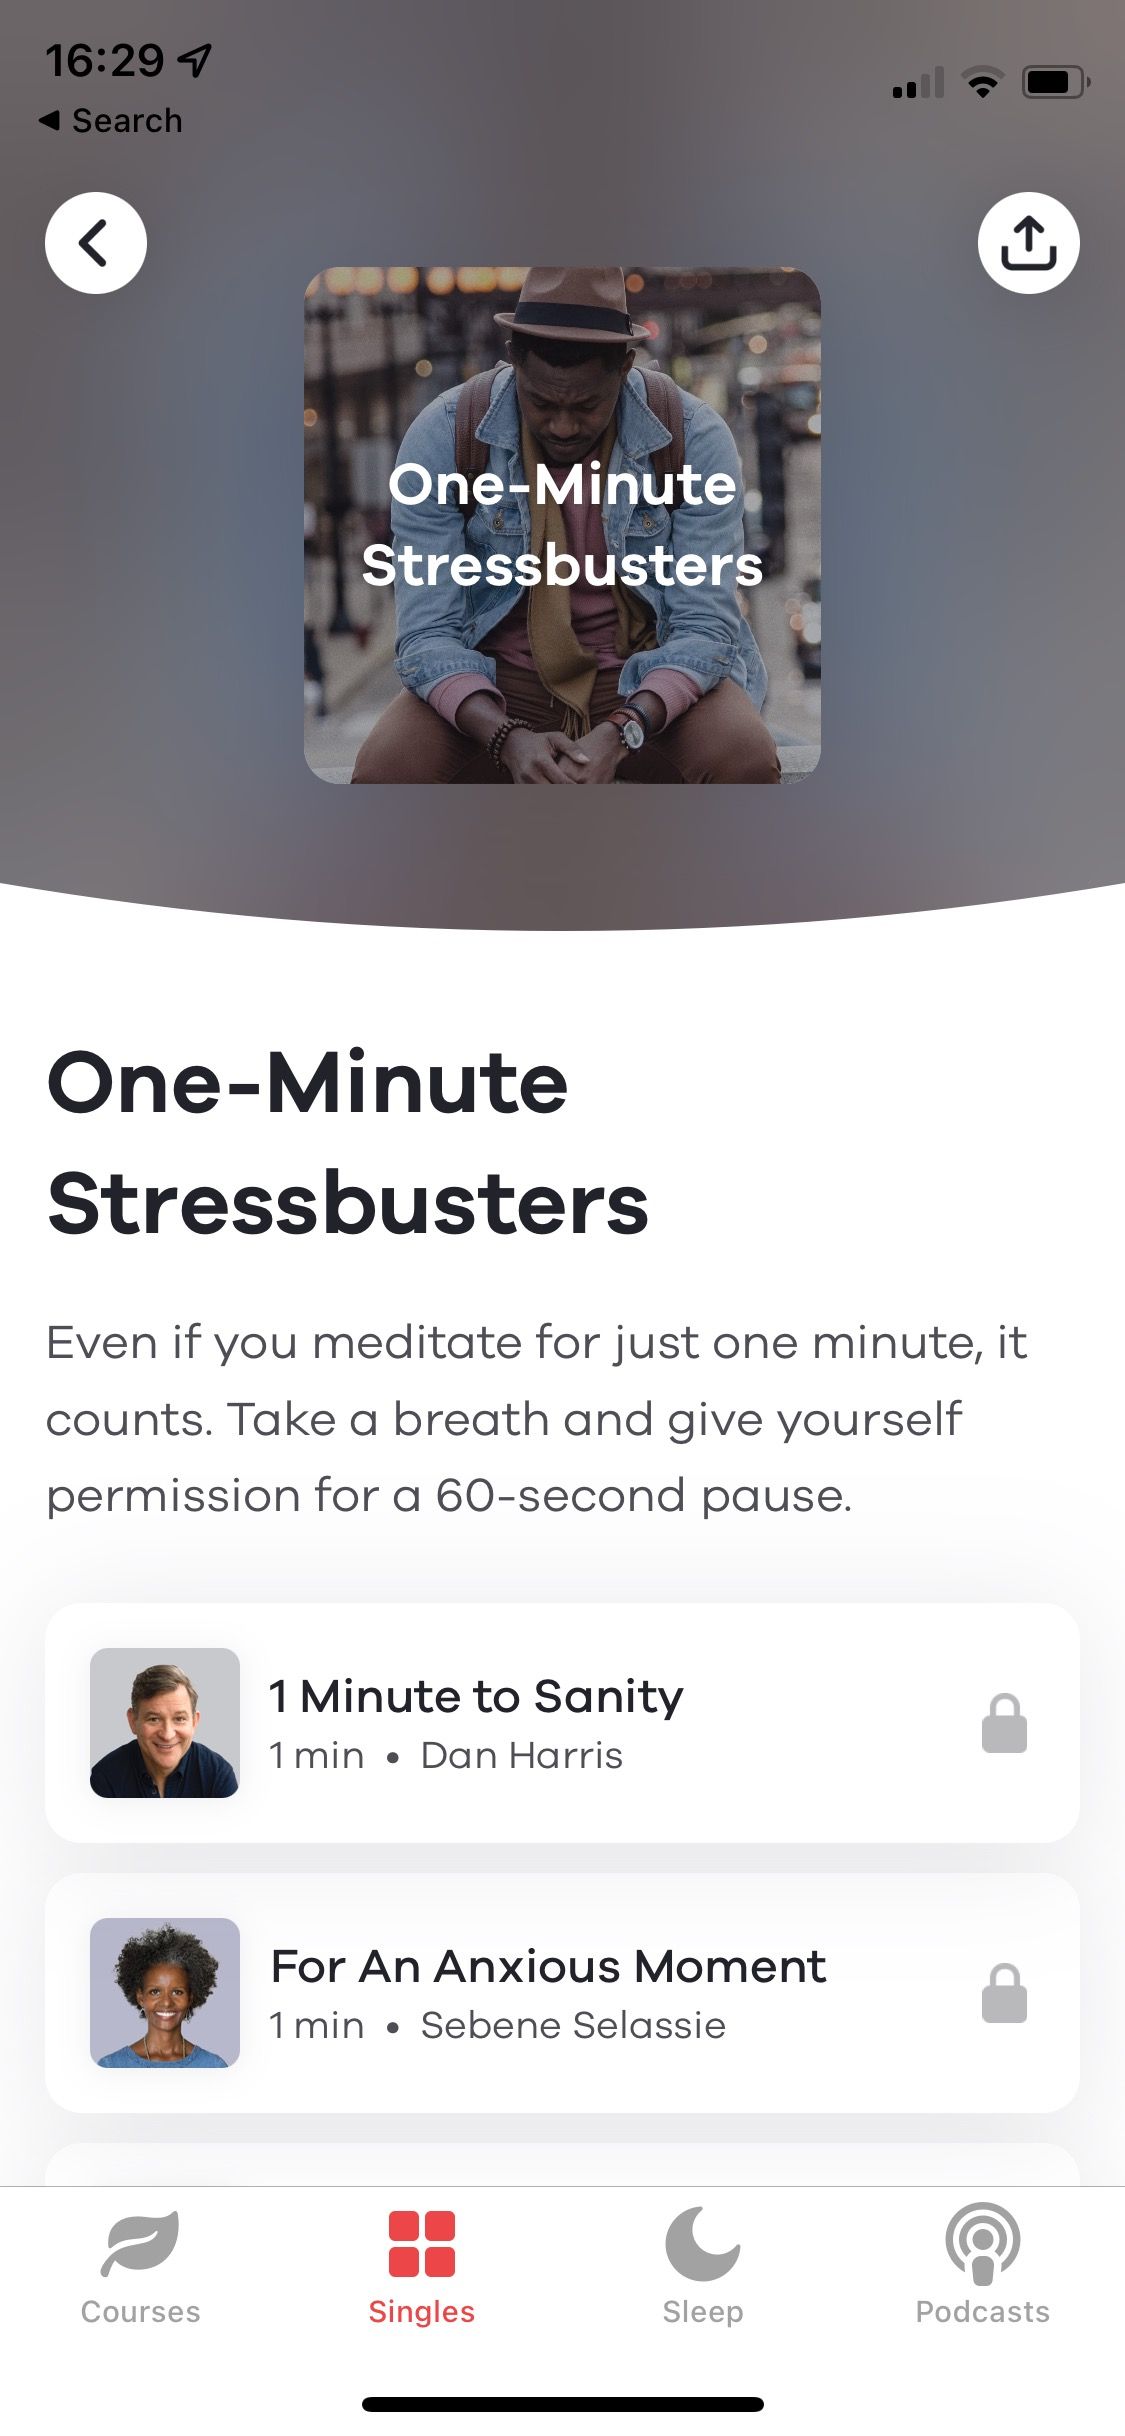 Screenshot of Ten Percent app showing one minute stressbusters